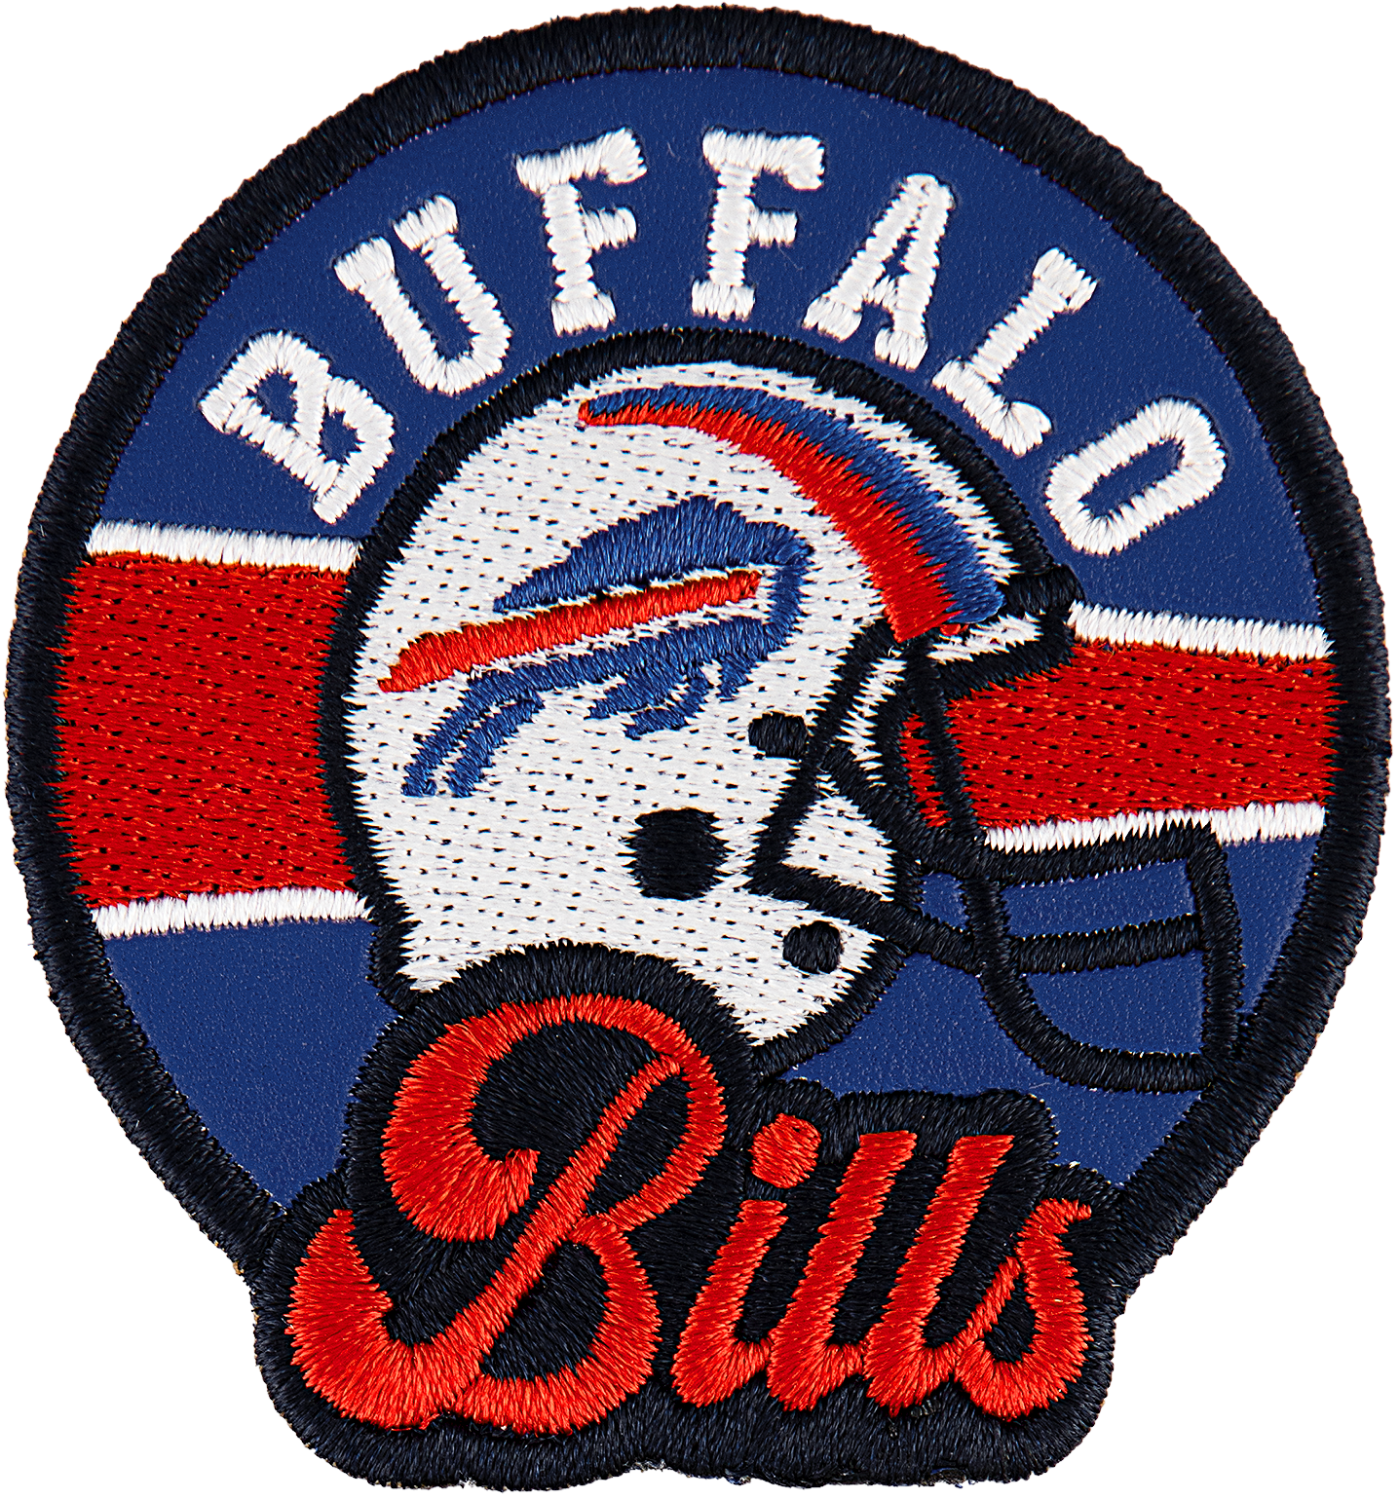 1994 BUFFALO BILLS NFL FOOTBALL 35TH YEAR JERSEY PATCH